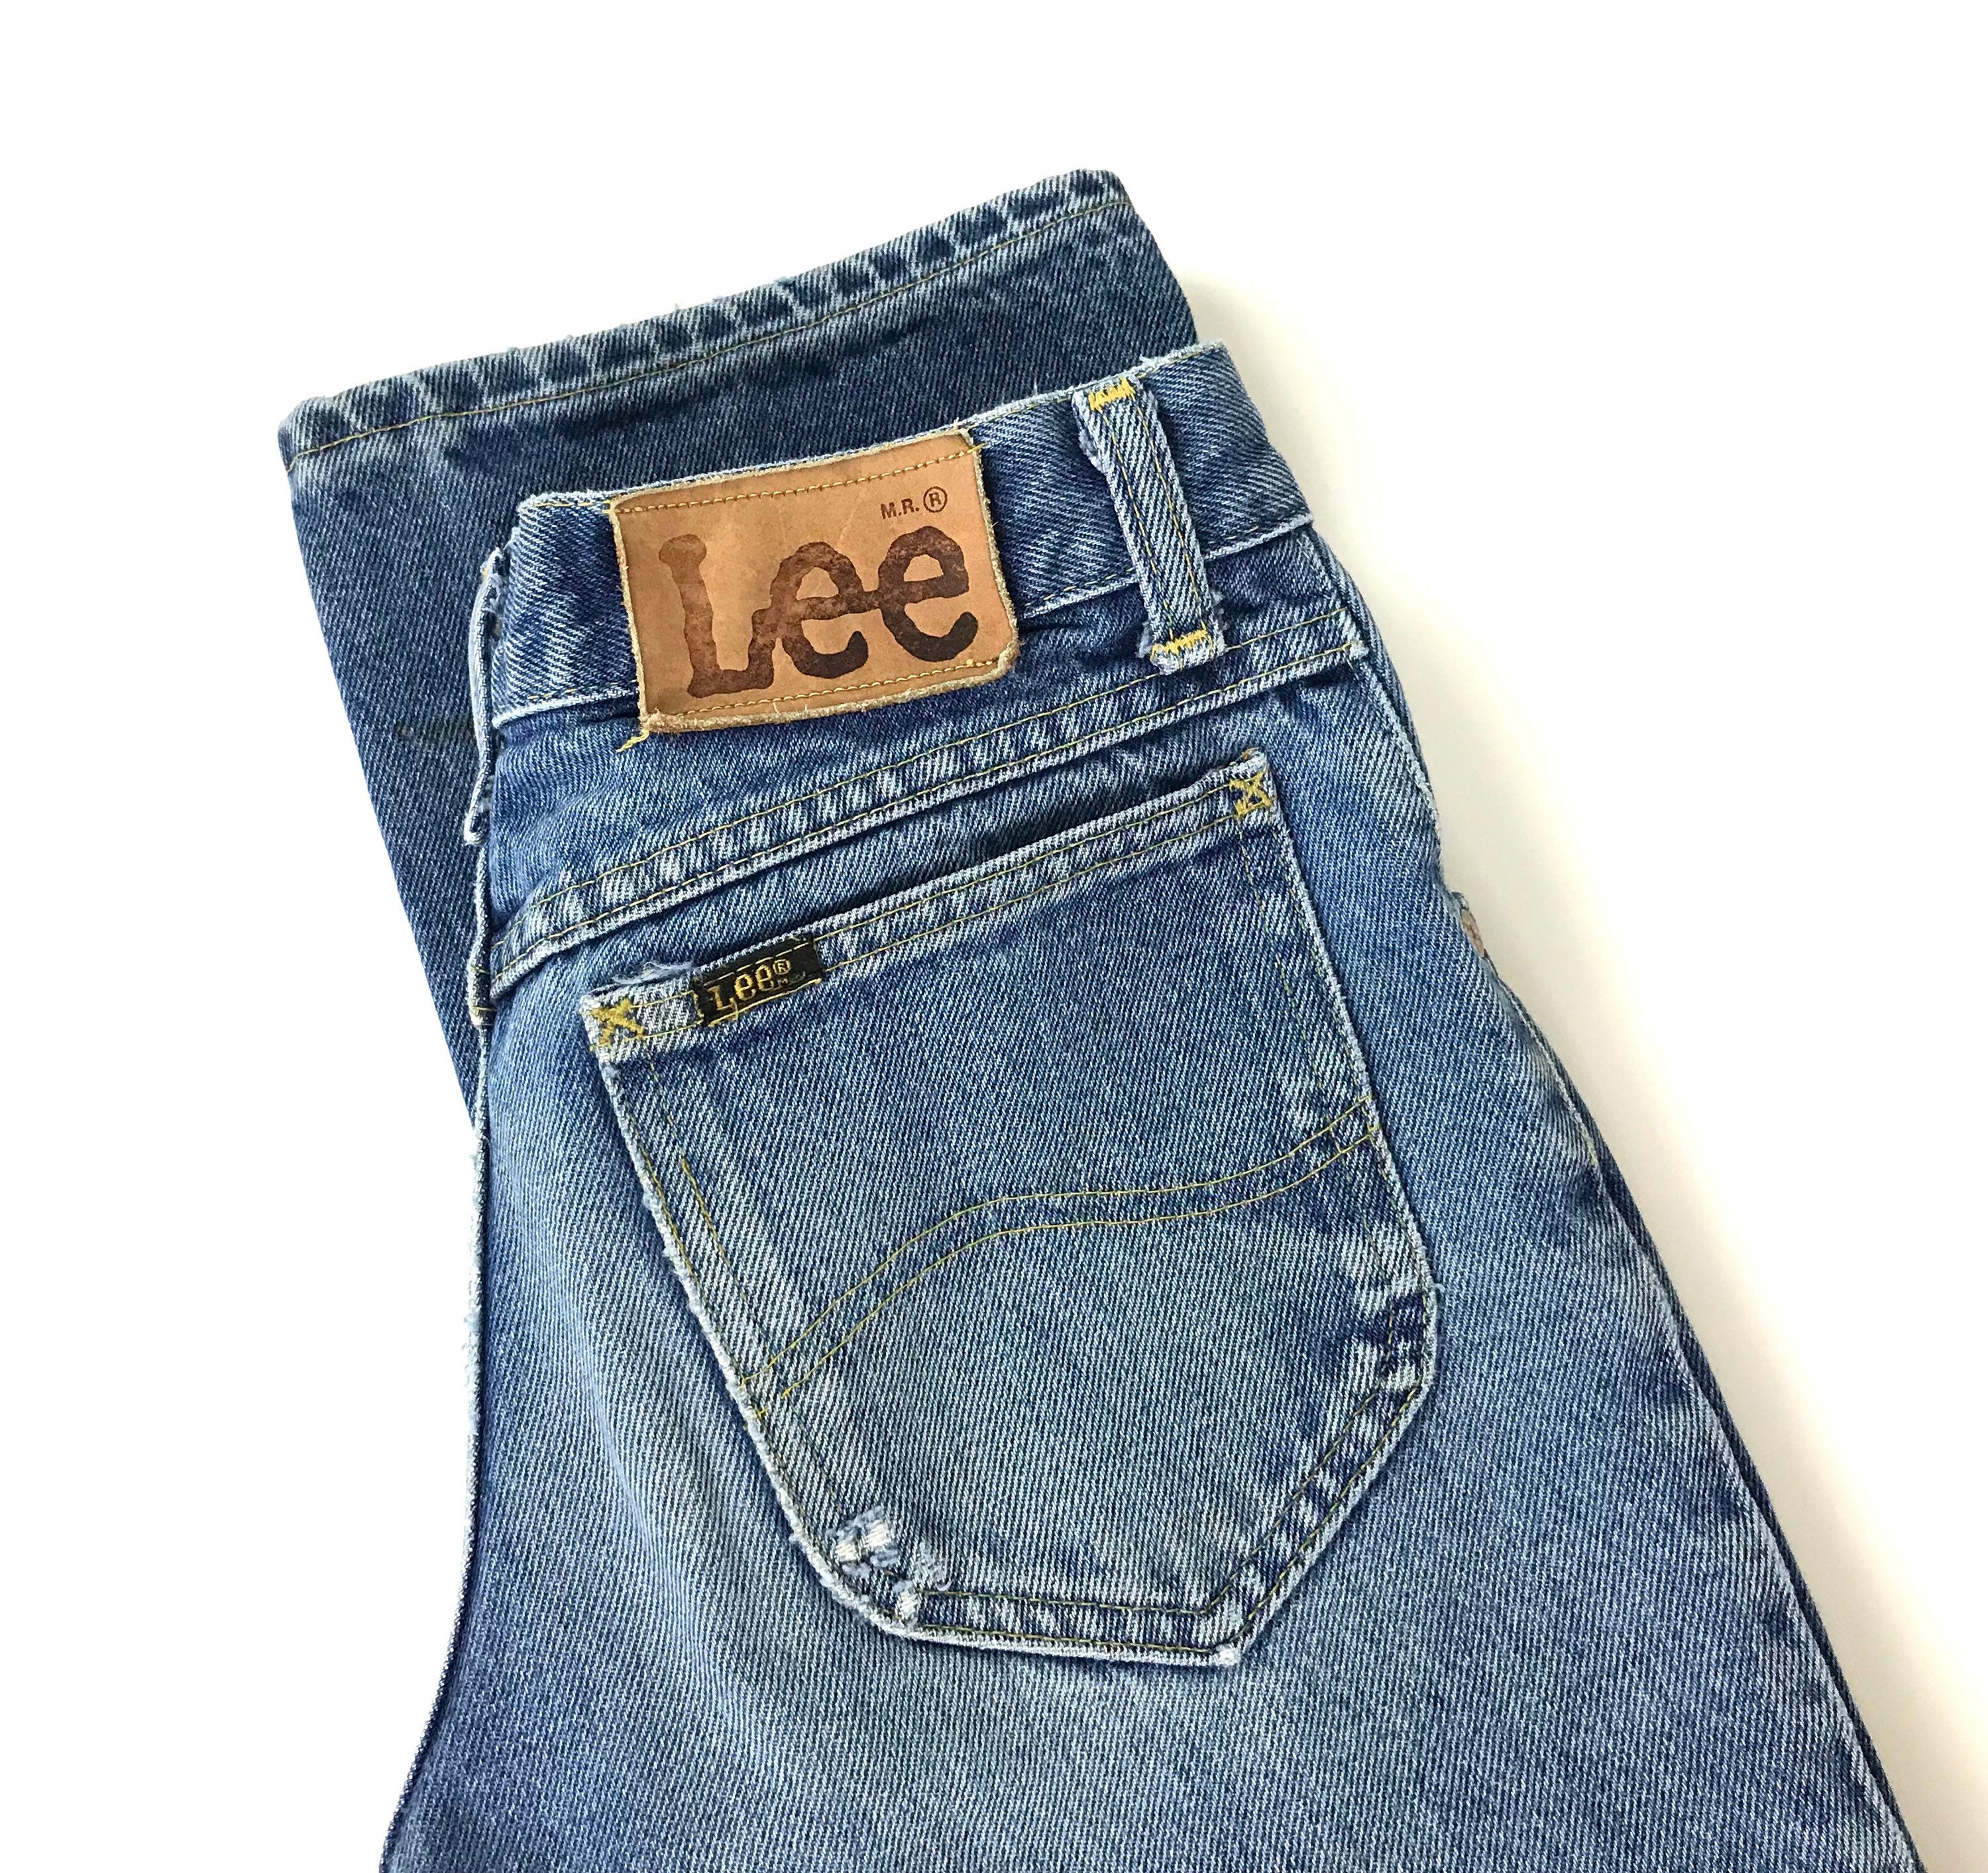 Lee Riders Vintage Jeans / Size 23